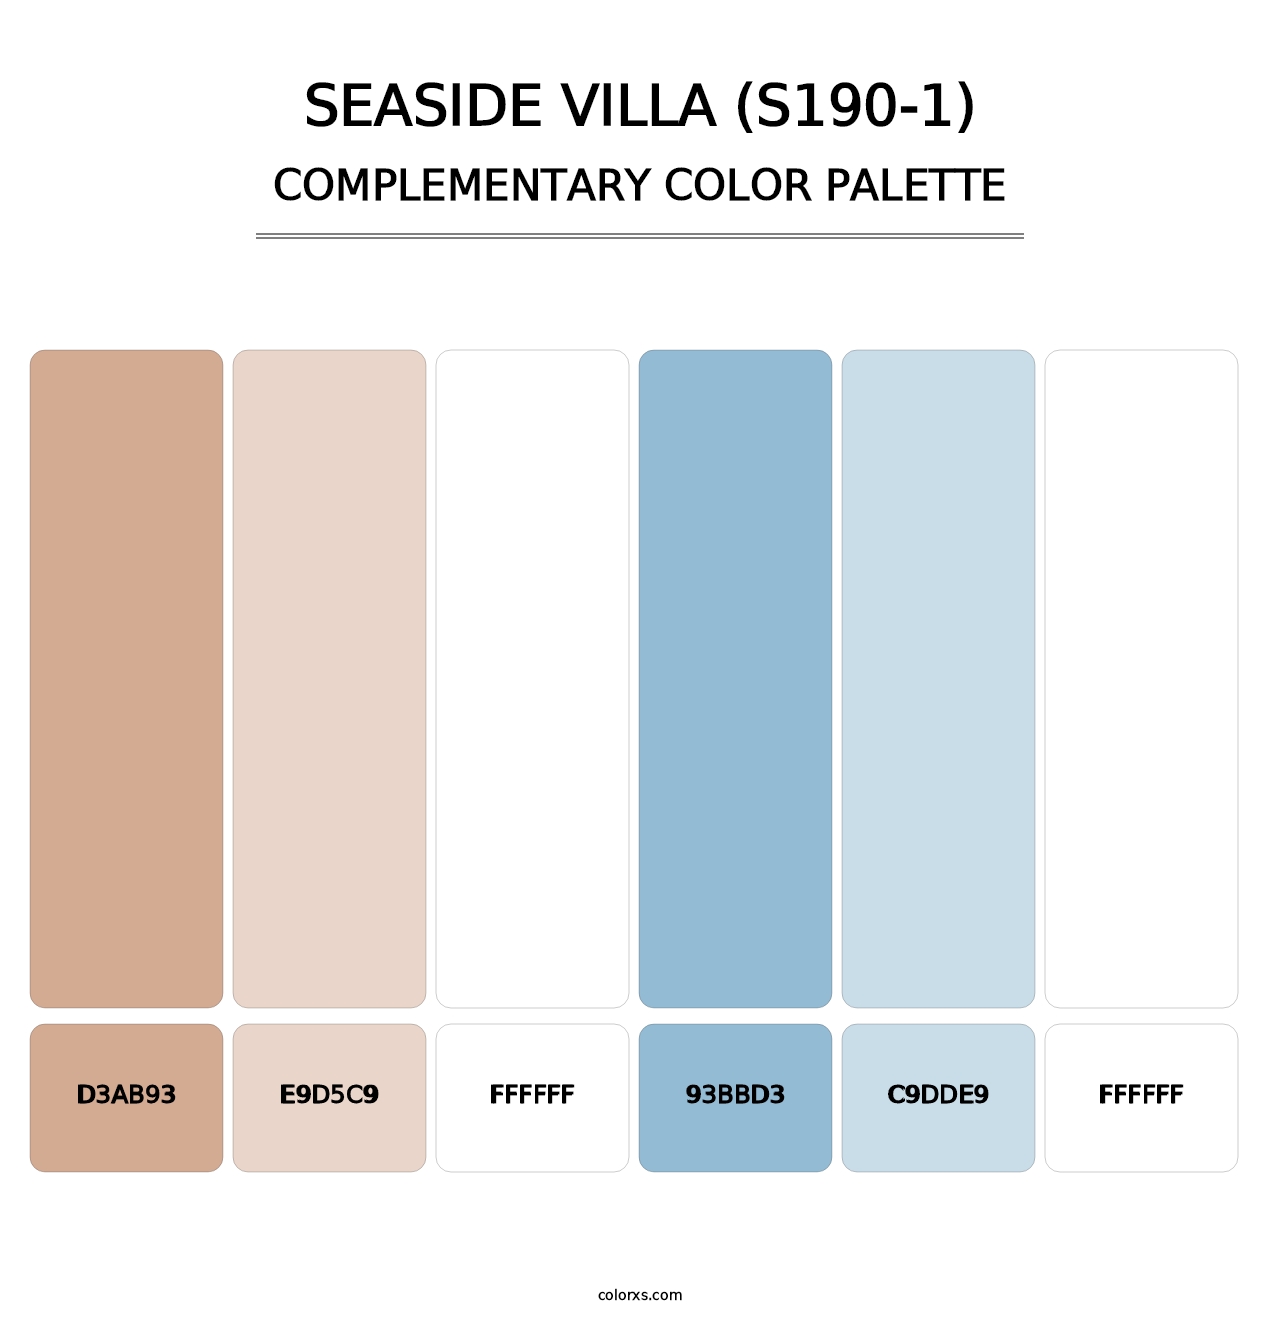 Seaside Villa (S190-1) - Complementary Color Palette